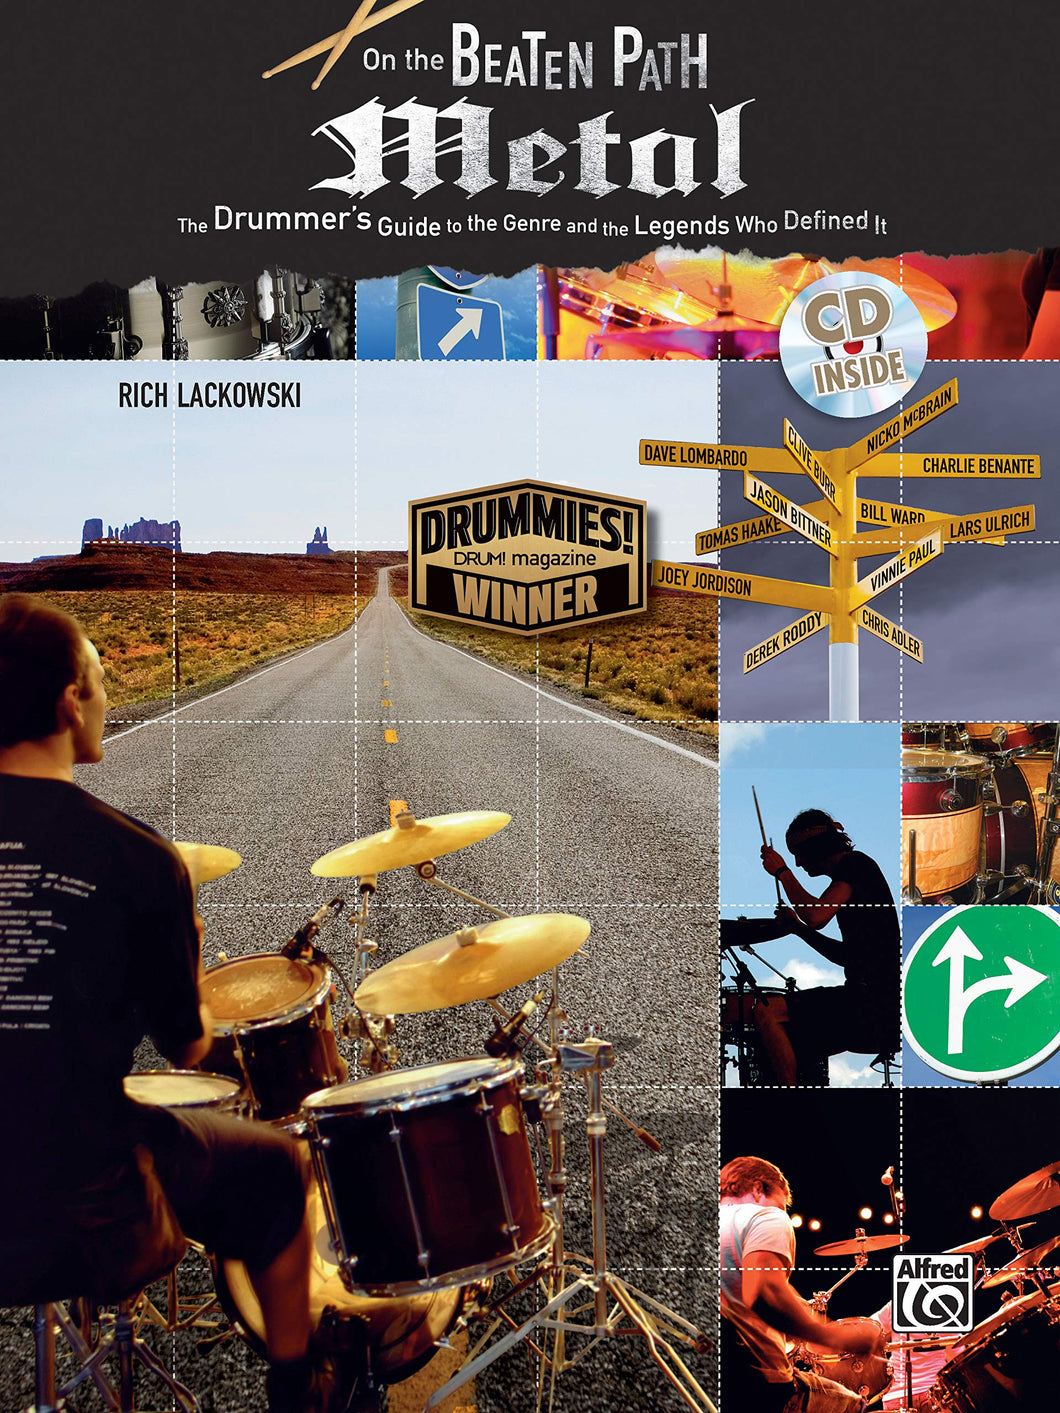 Gangland - Iron Maiden - Collection of Drum Transcriptions / Drum Sheet Music - Alfred Music OBPMDGGLWDI